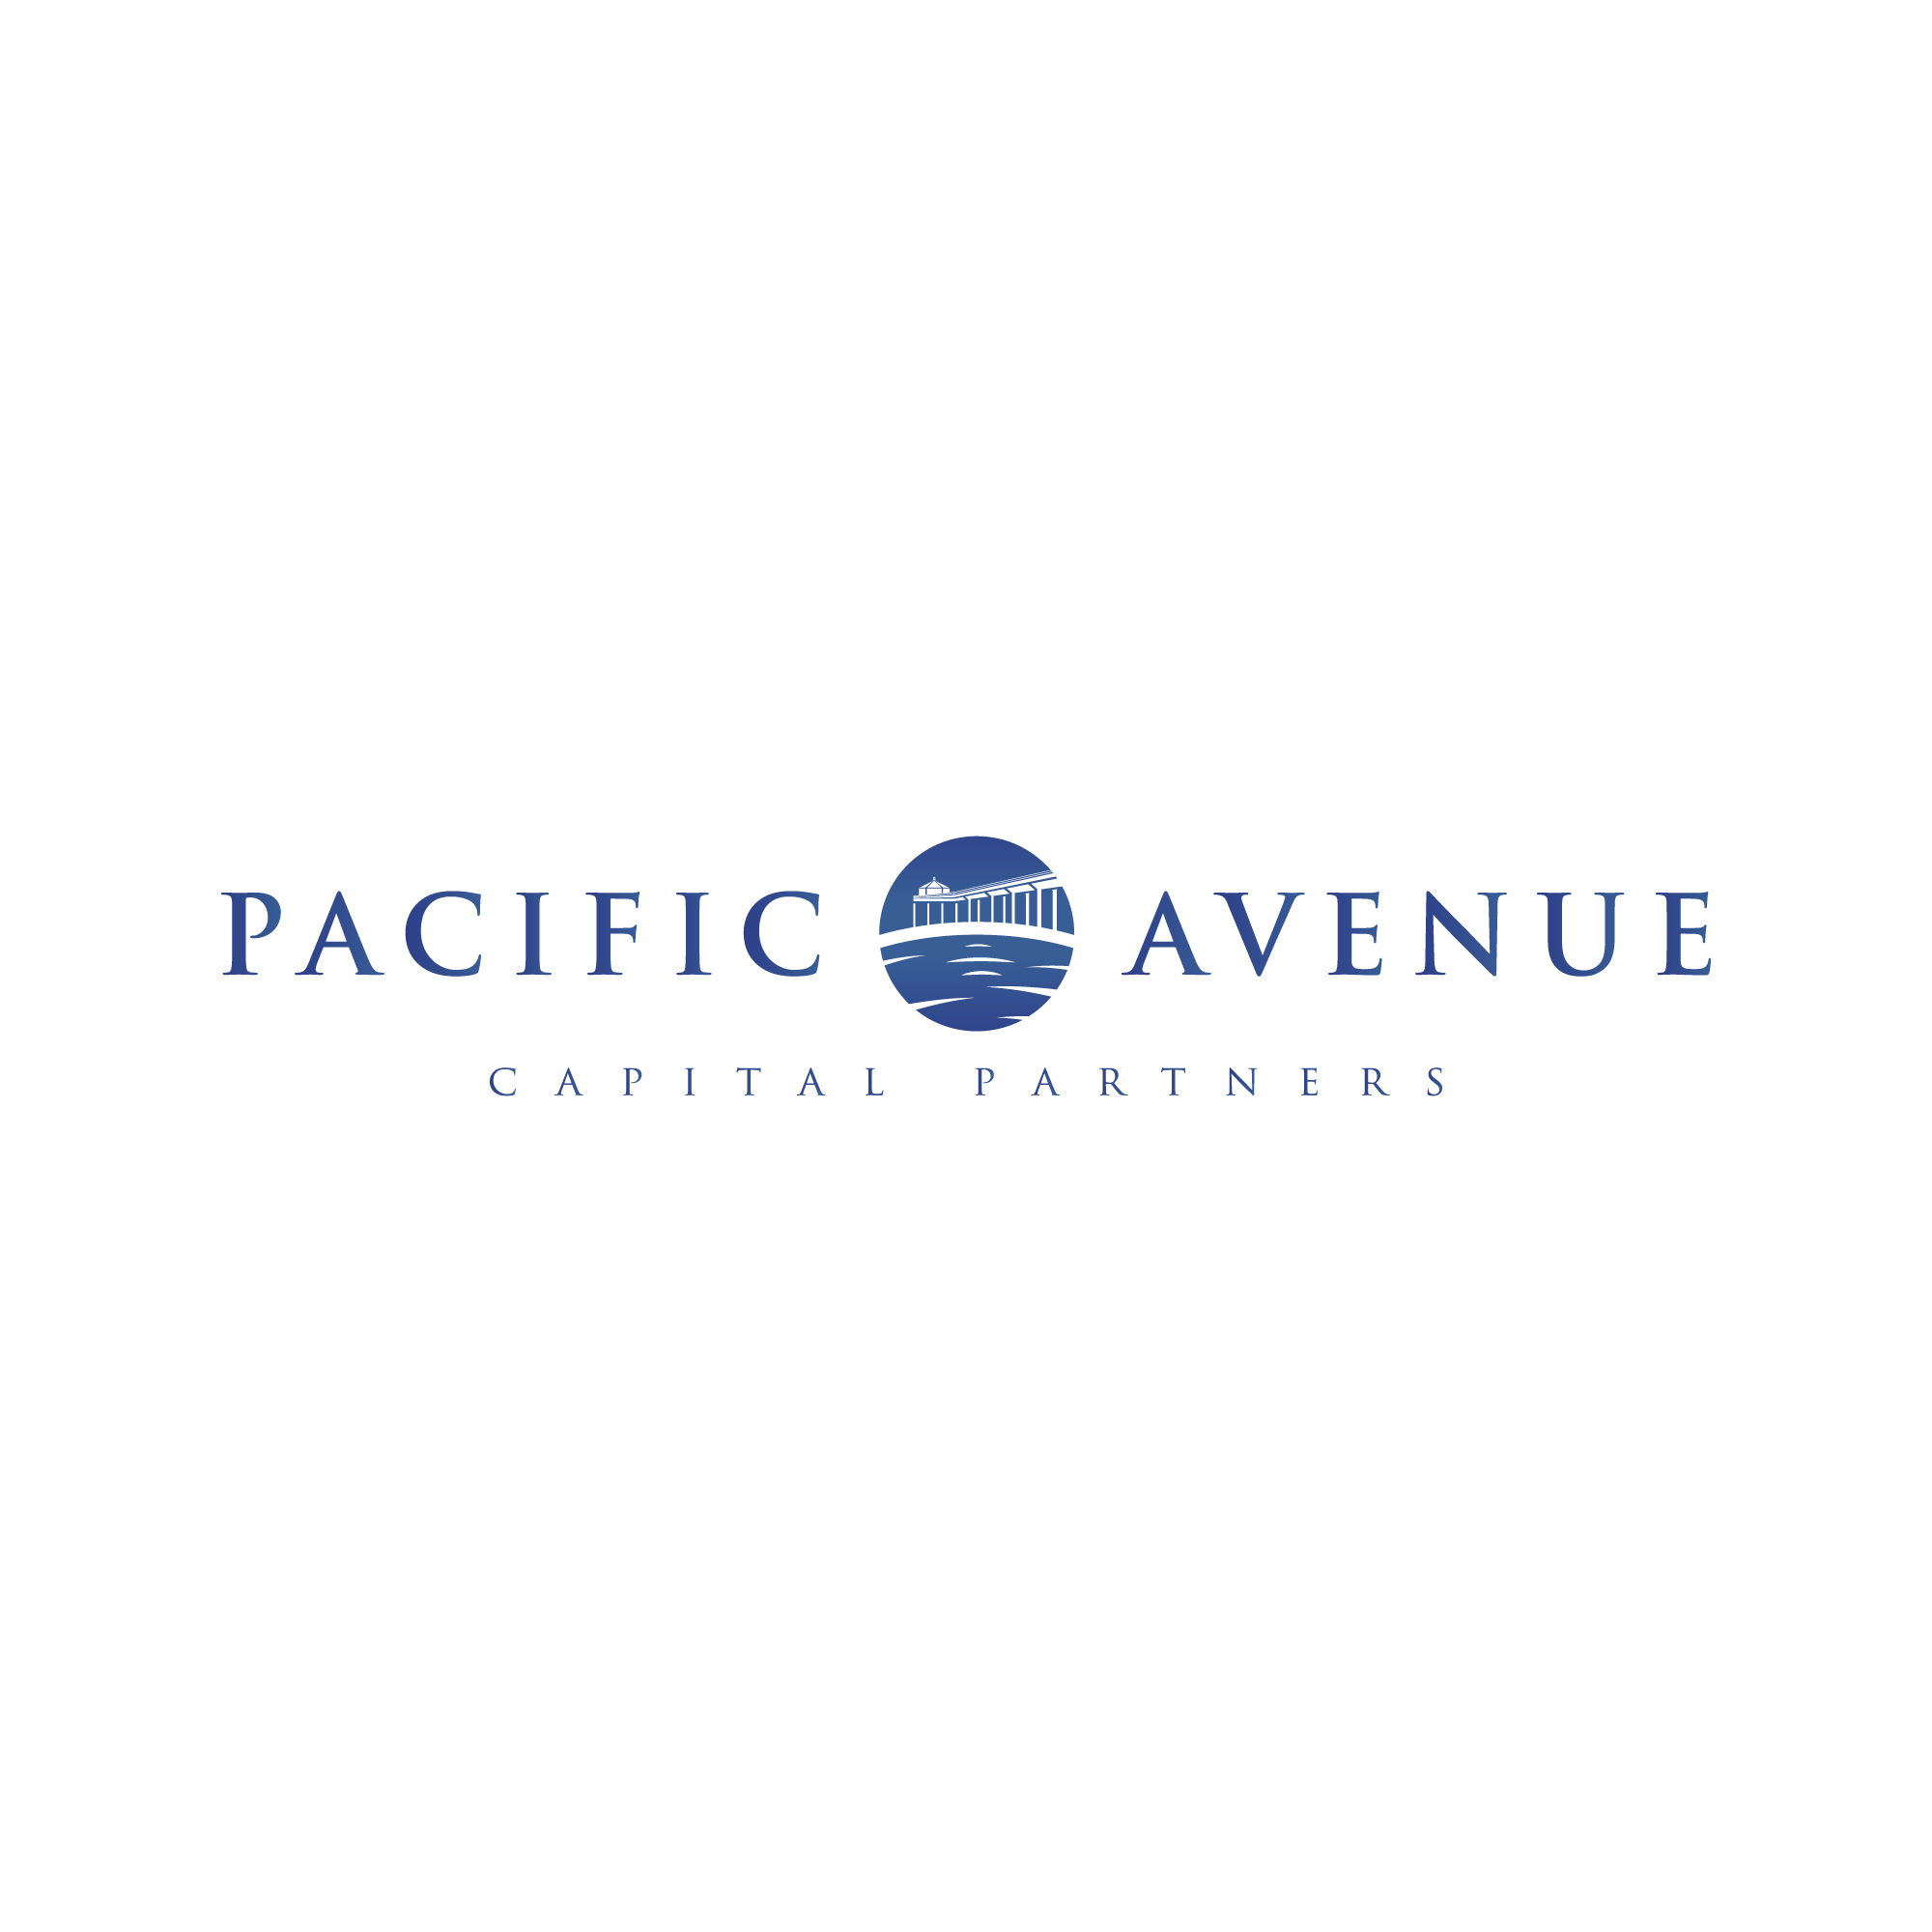 Pacific Avenue Capital